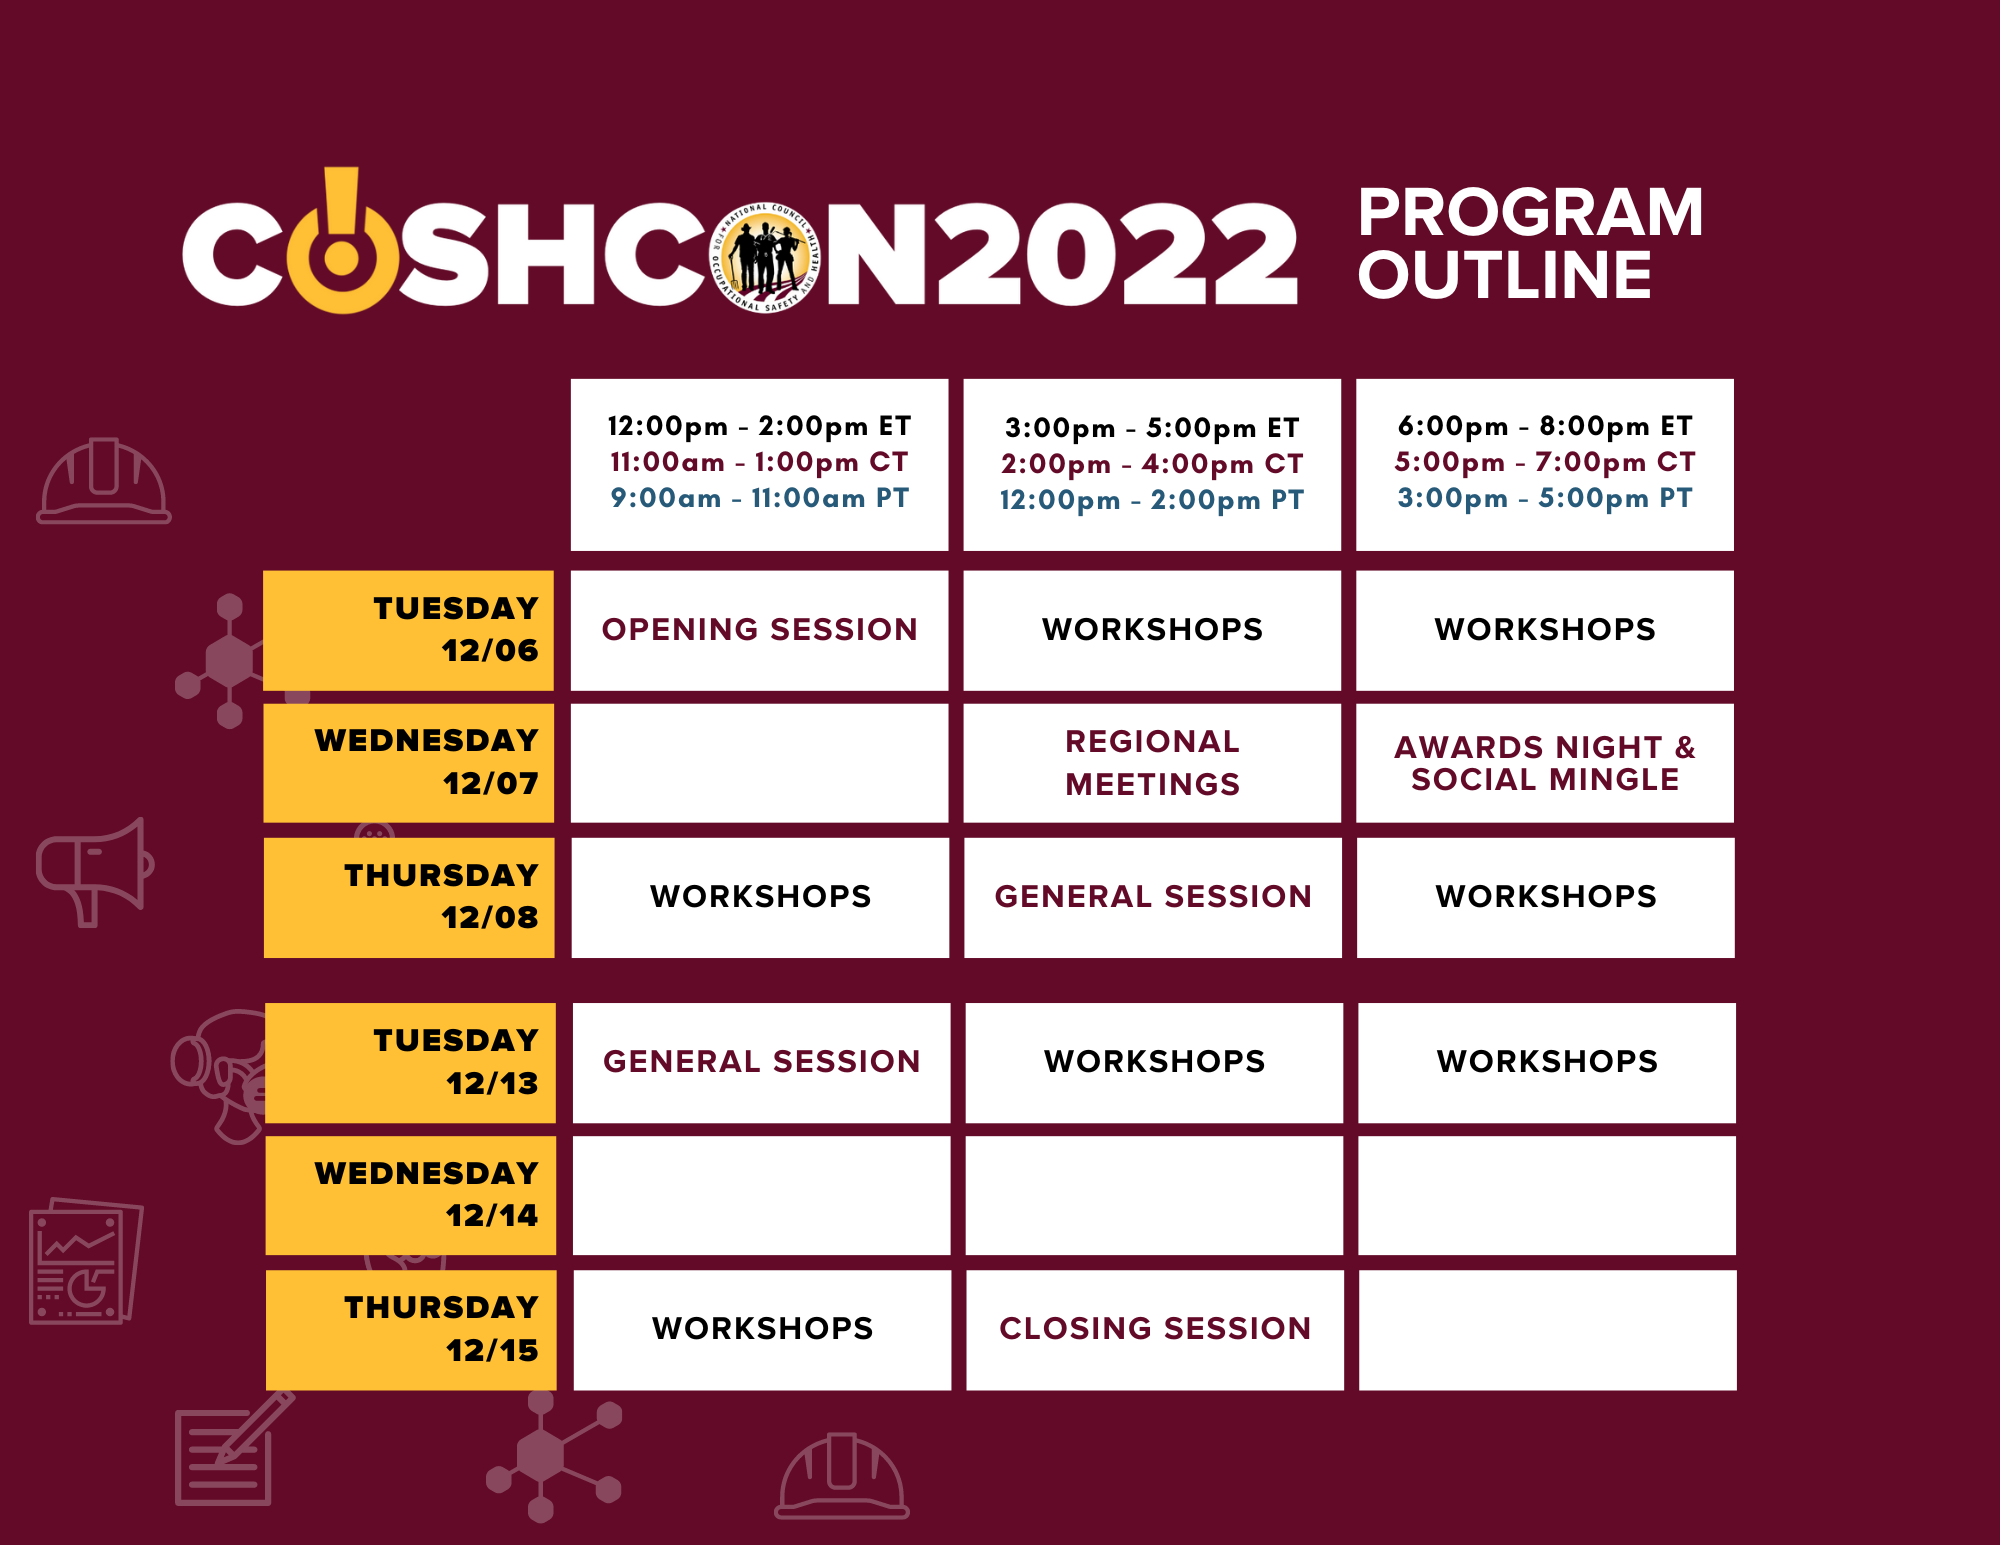 COSHCON2022 Program Outline